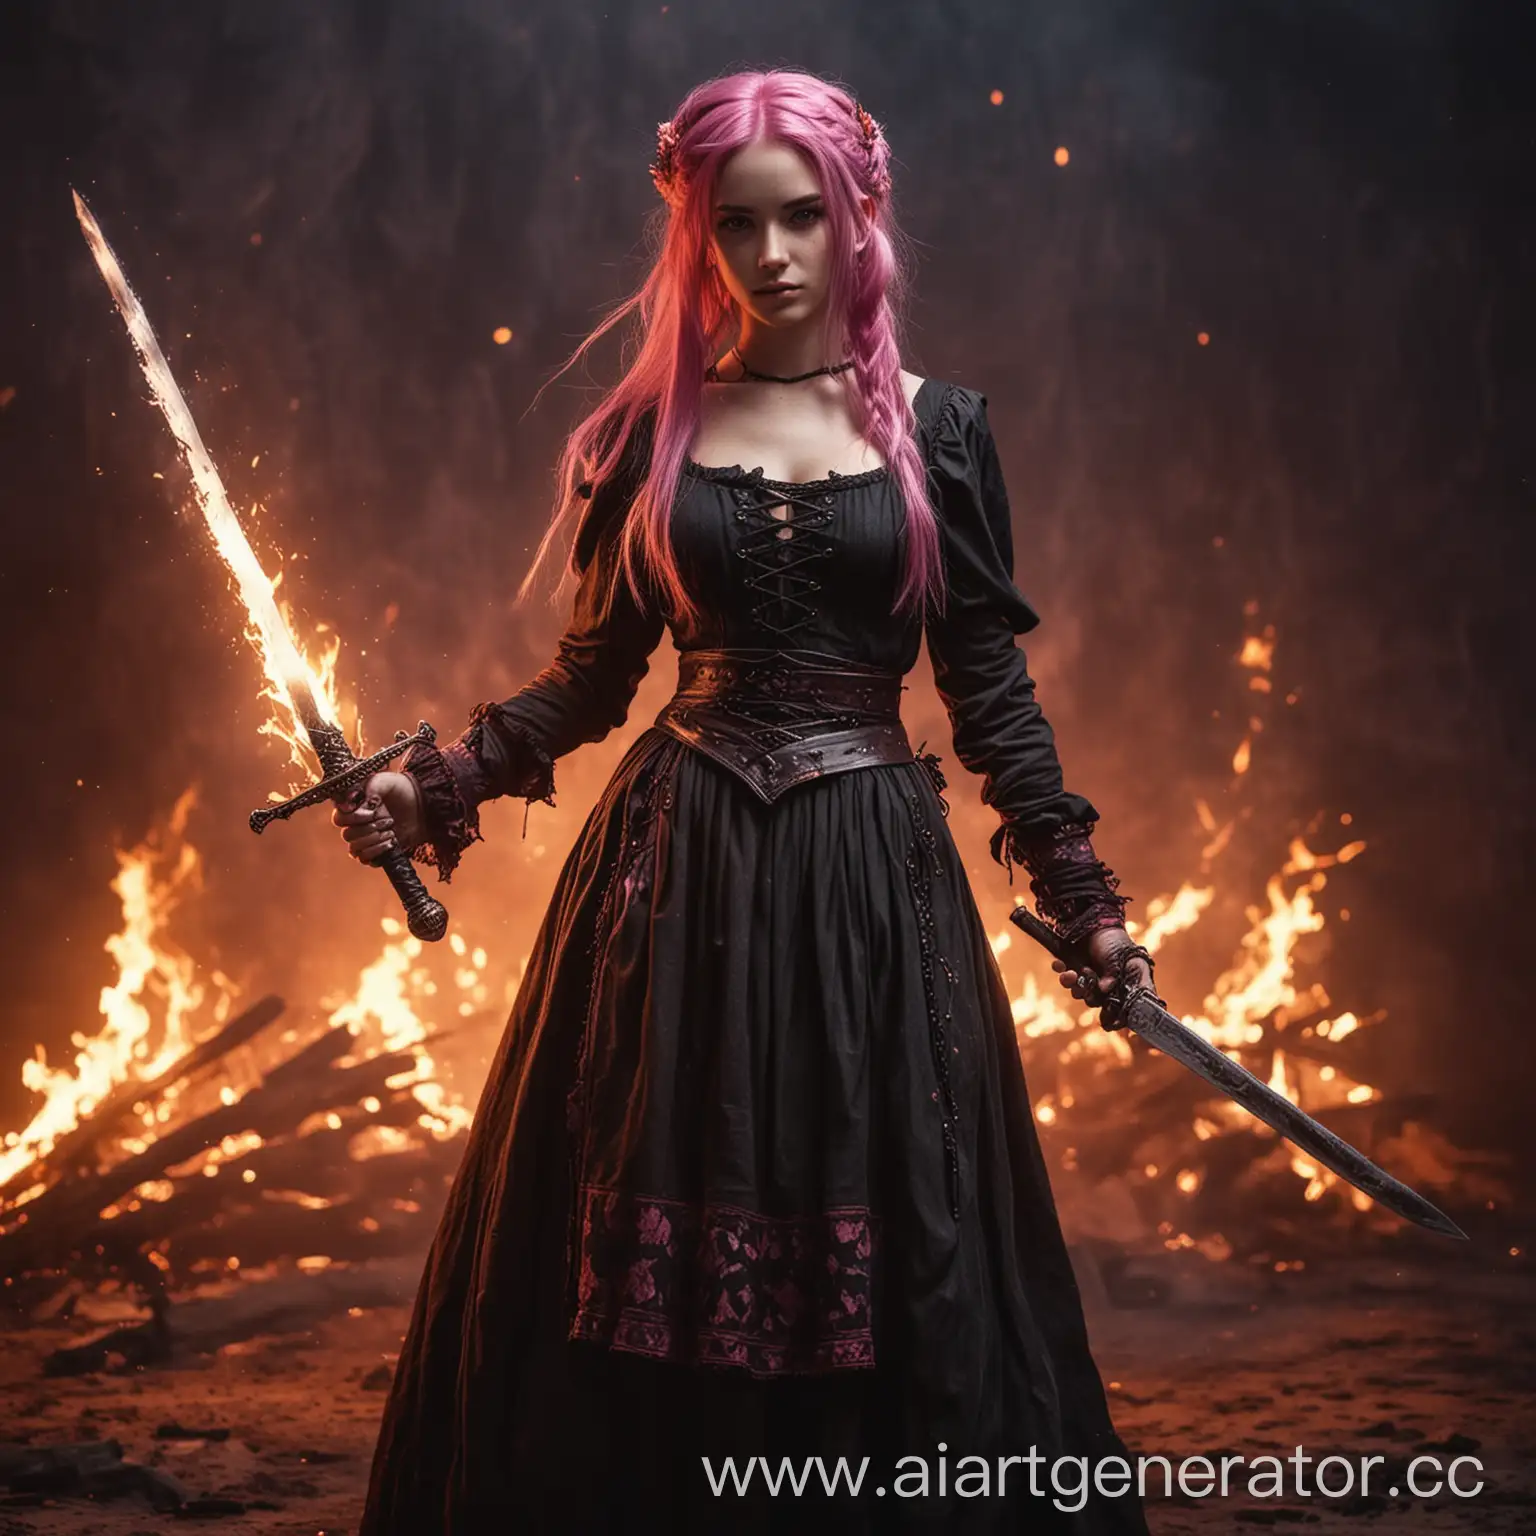 Girl-with-Sword-in-Fiery-Background-Dark-Fantasy-Art